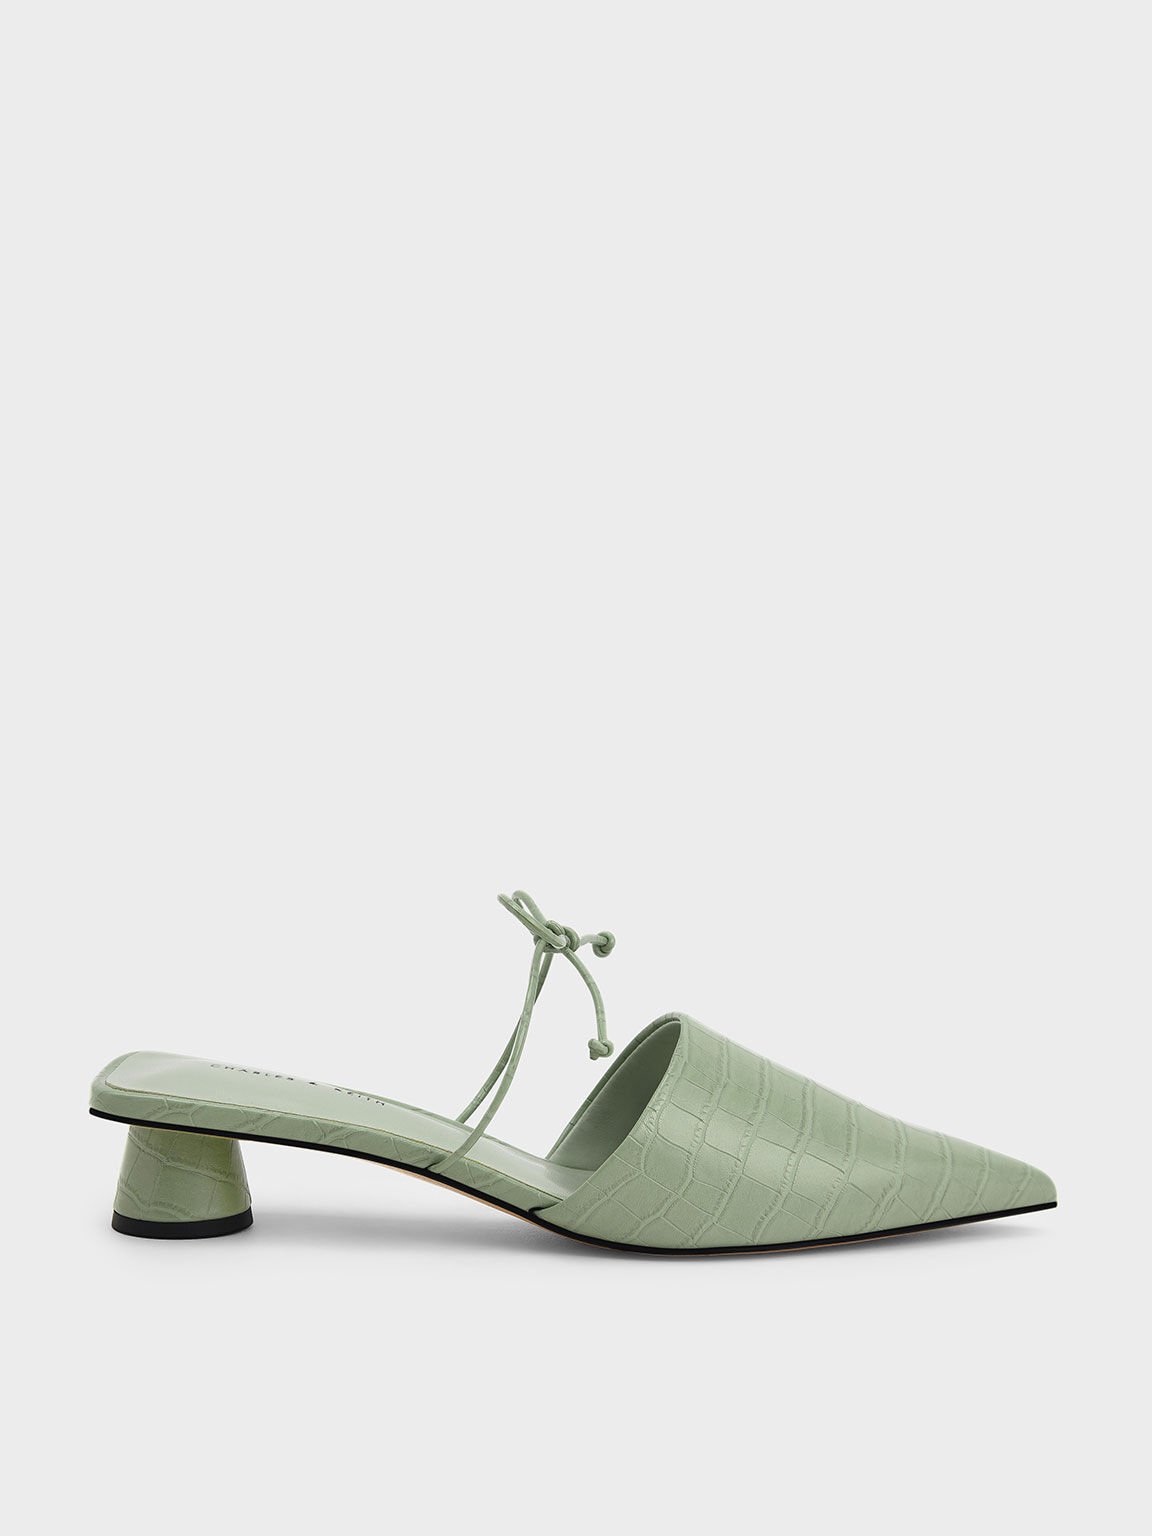 Croc-Effect Bow-Tie Mules, Animal Print Green, hi-res